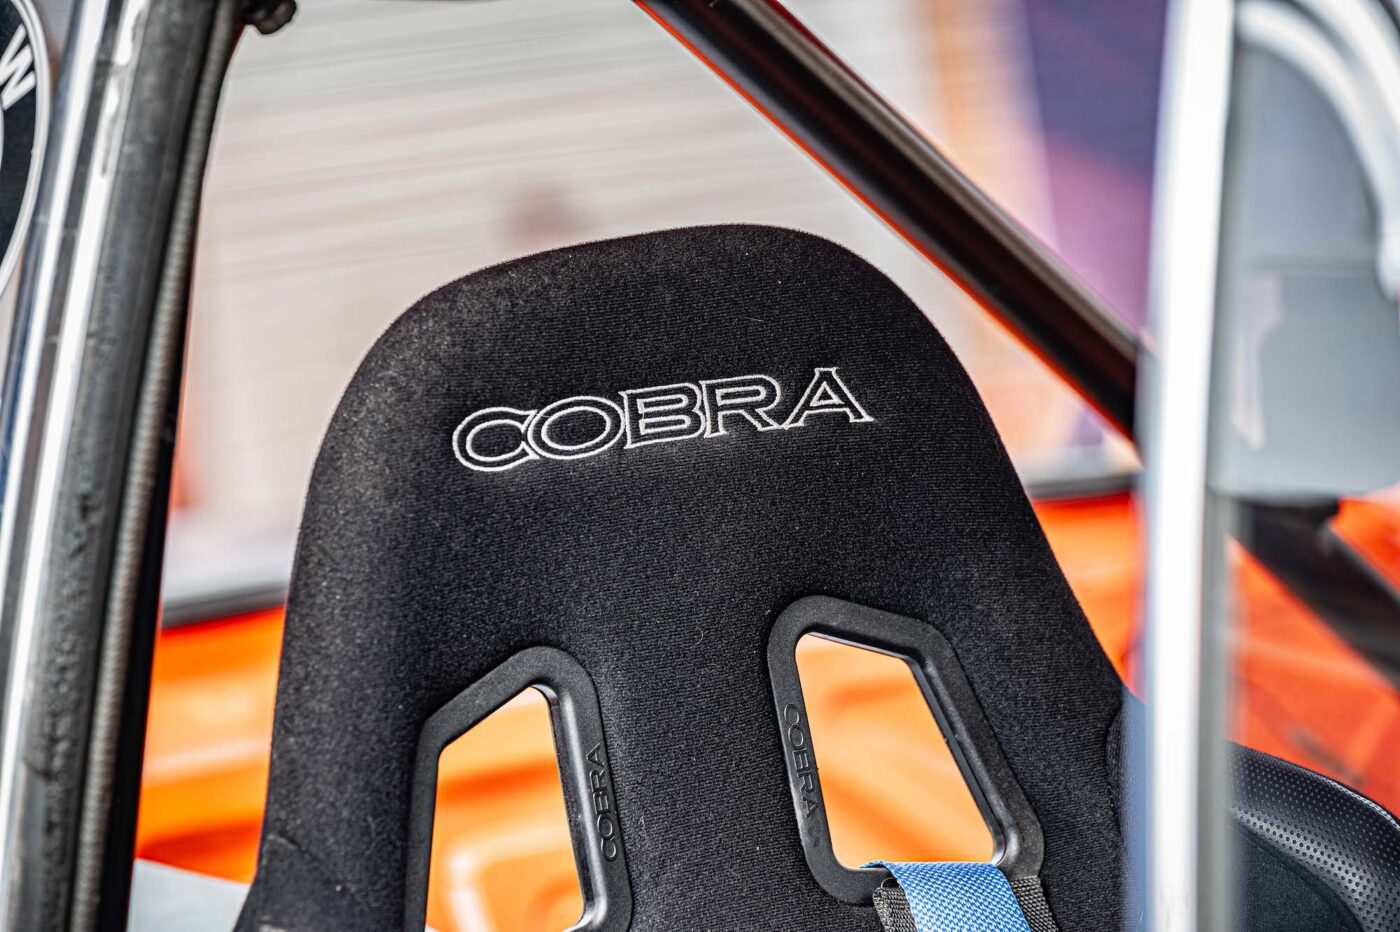 Cobra racing seats